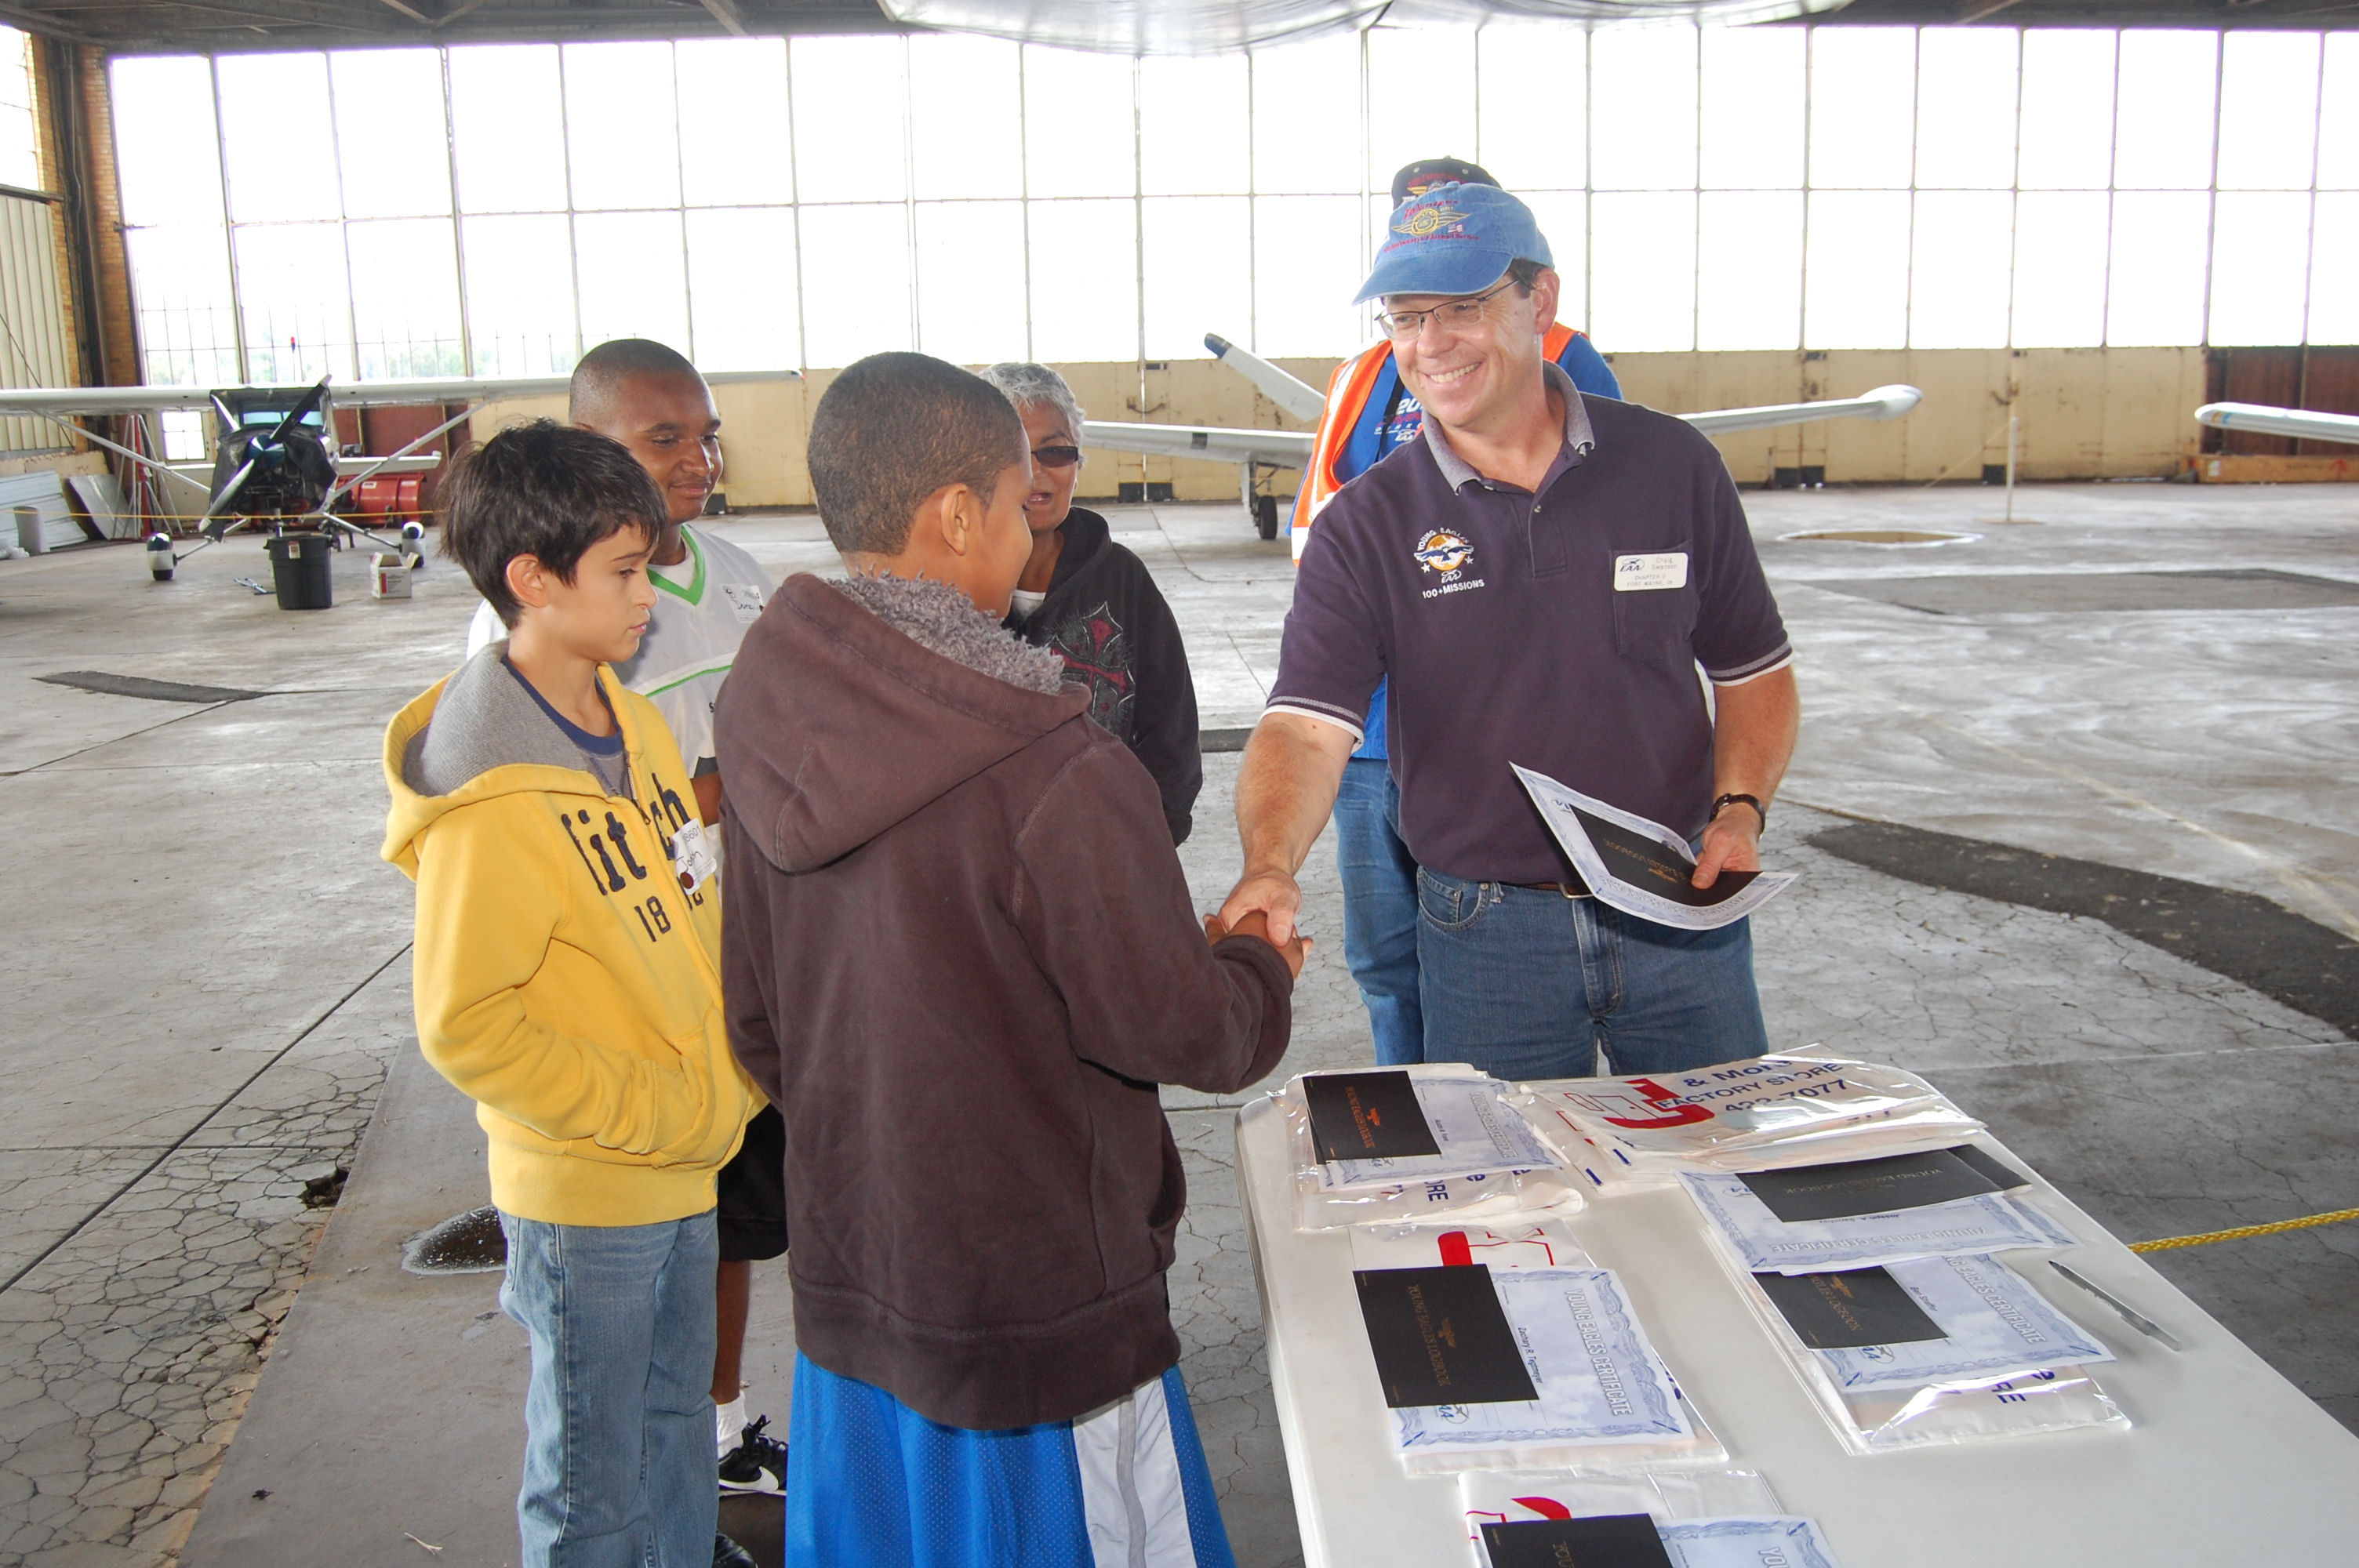 Children Reciving Aviation Certification